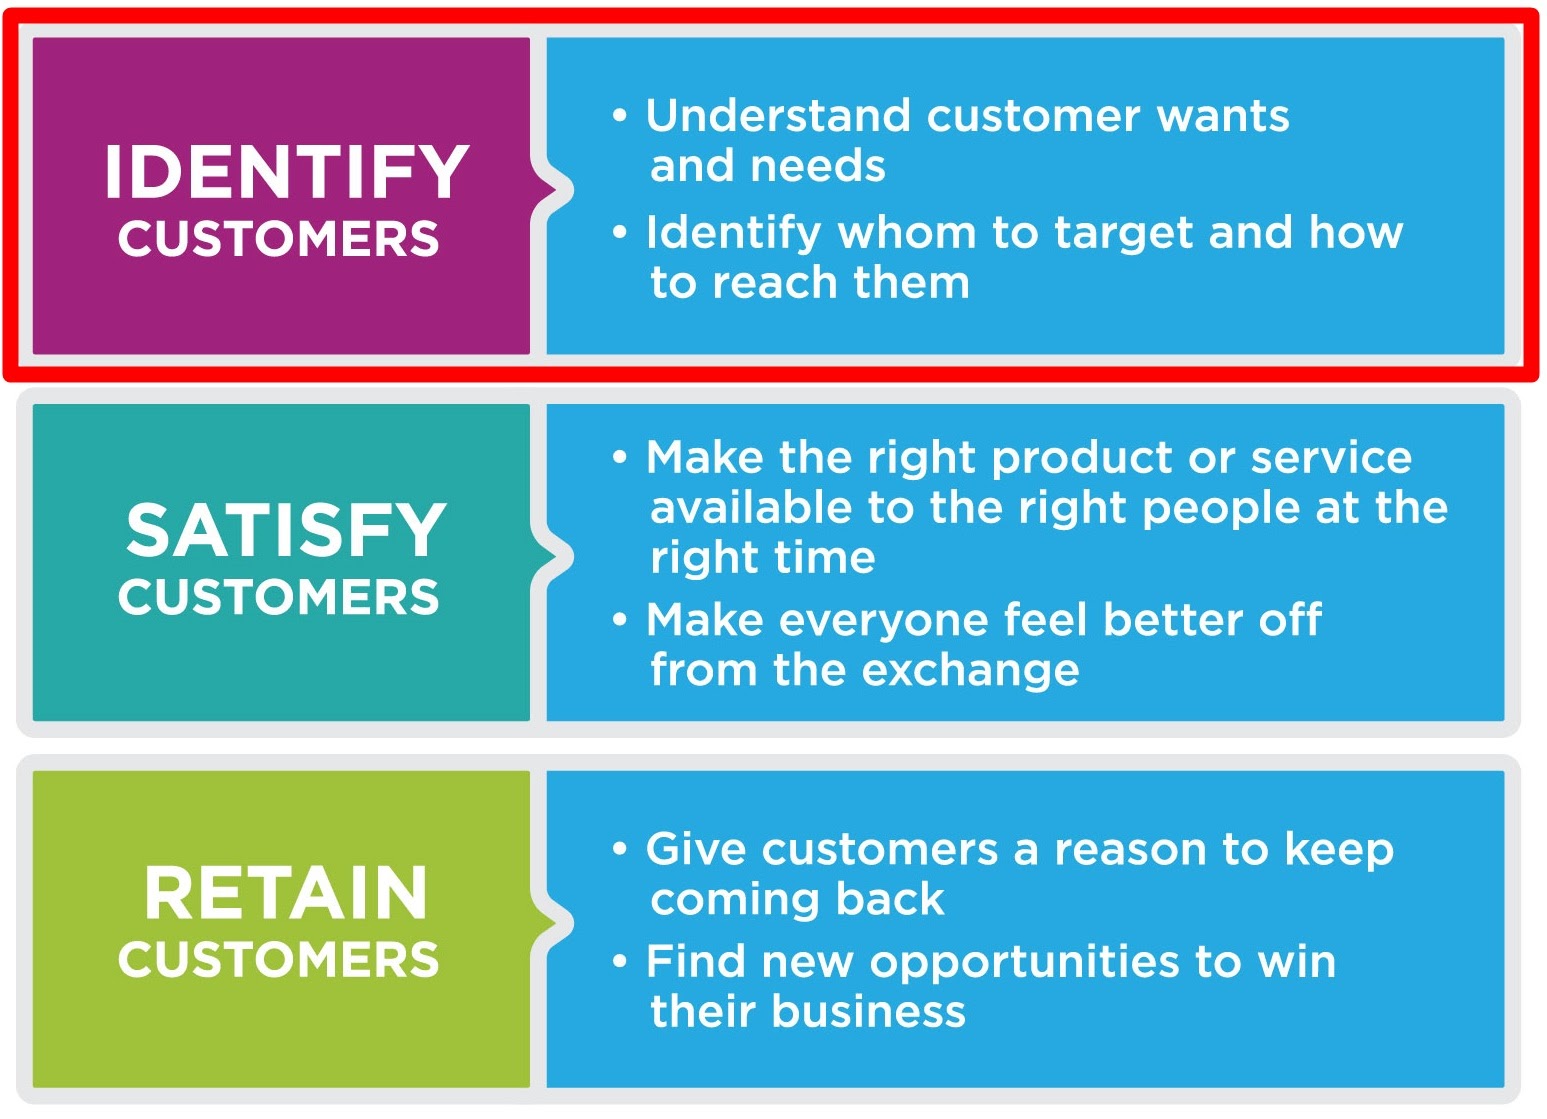 Three Role of Customers in Marketing - Identity, Satisfy, Retain